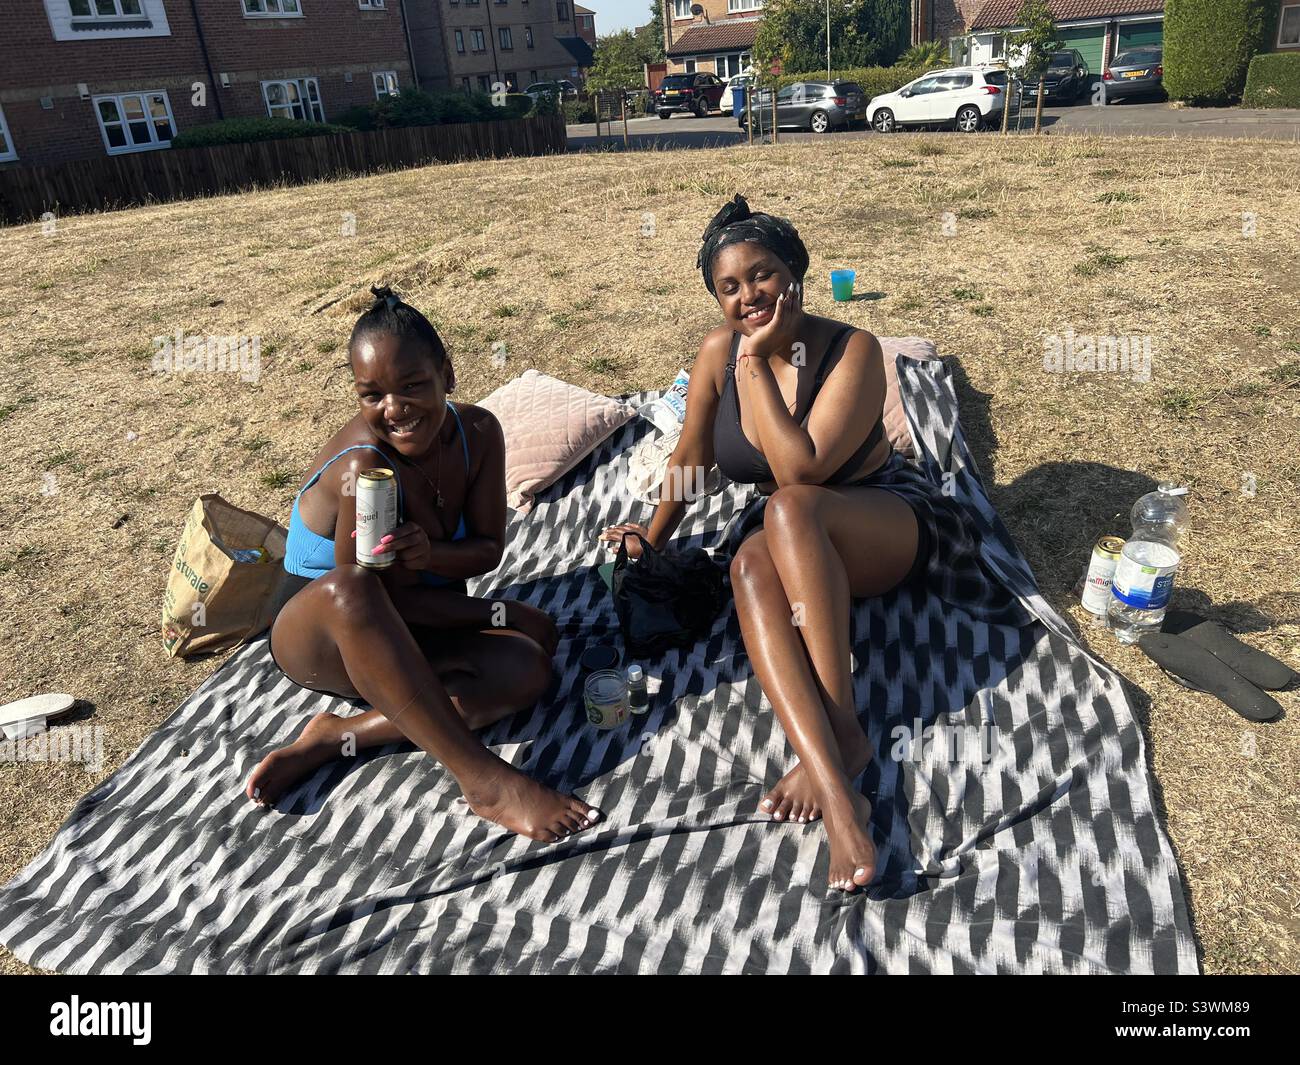 Women sunbathing parched lawn during London’s heatwave Stock Photo